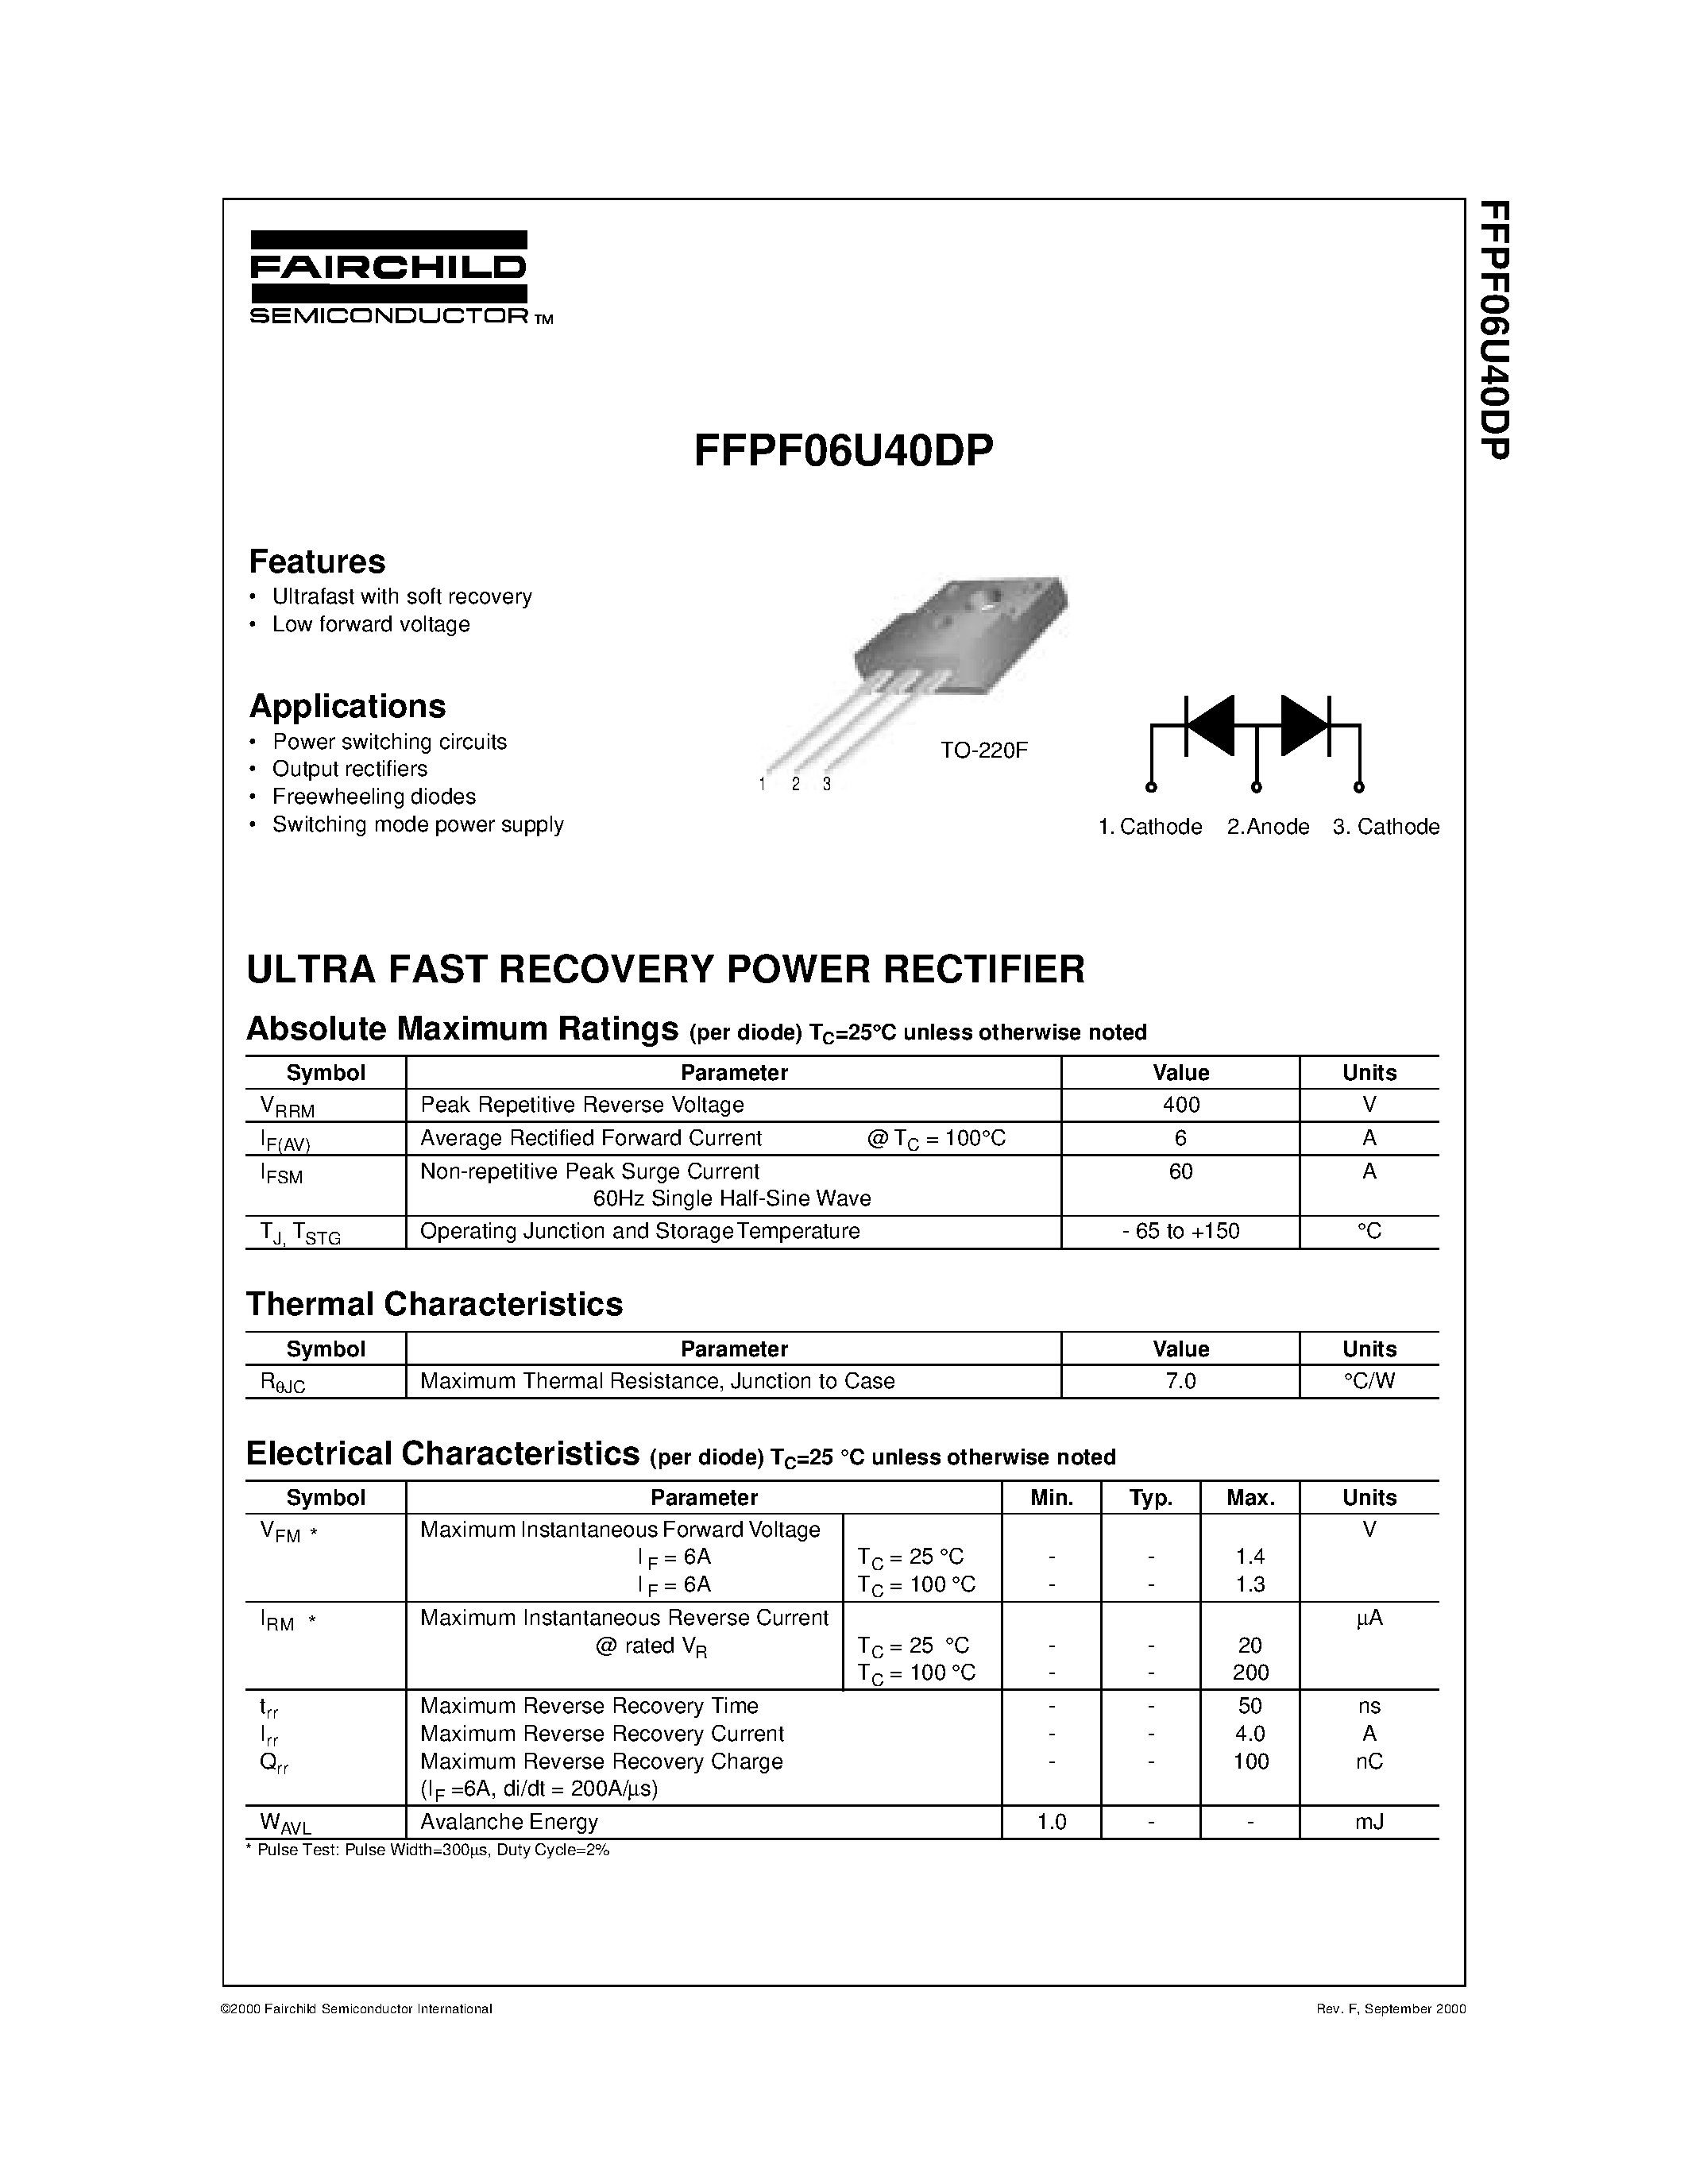 Datasheet FFPF06U40DP - ULTRA FAST RECOVERY POWER RECTIFIER page 1